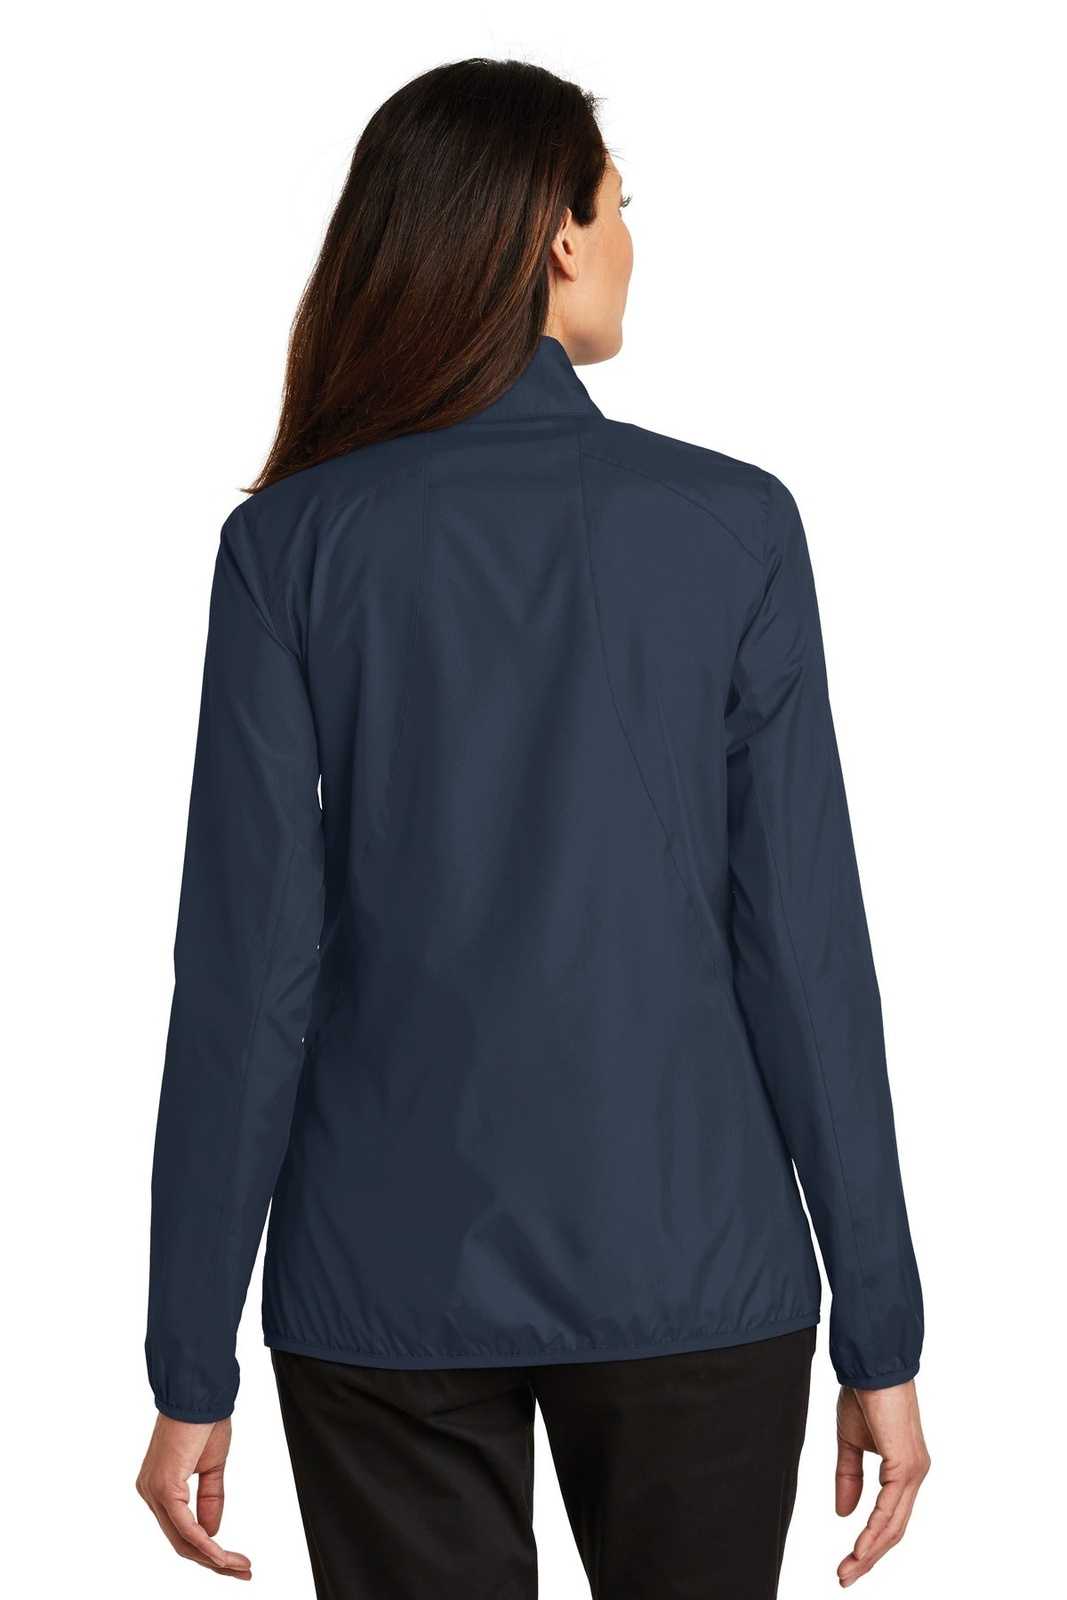 Port Authority L344 Ladies Zephyr Full-Zip Jacket - Dress Blue Navy - HIT a Double - 1